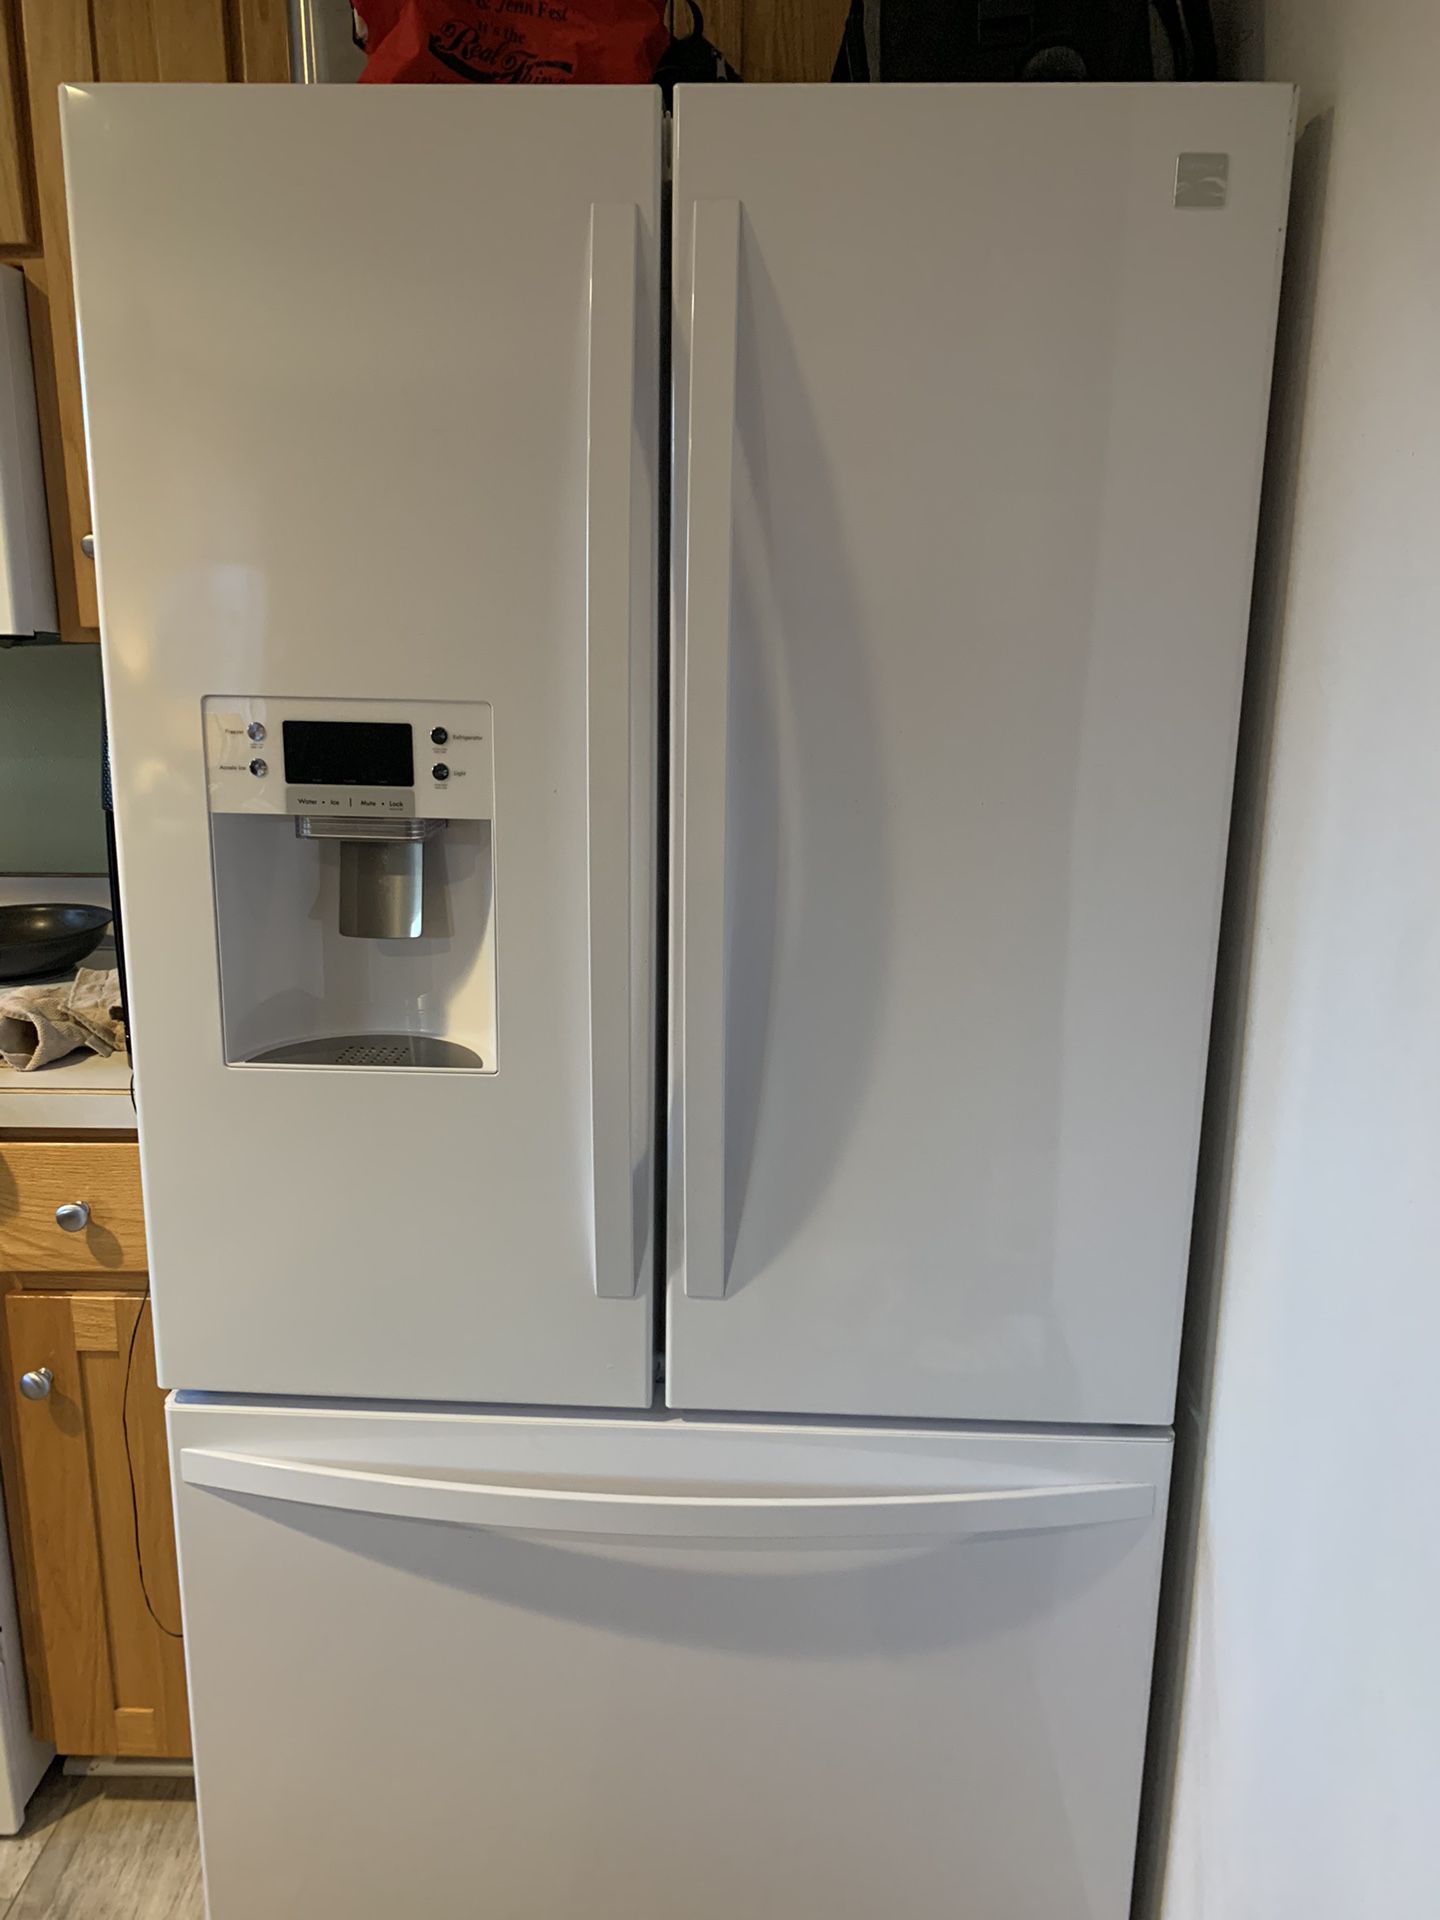 Kenmore Refrigerator/Freezer 